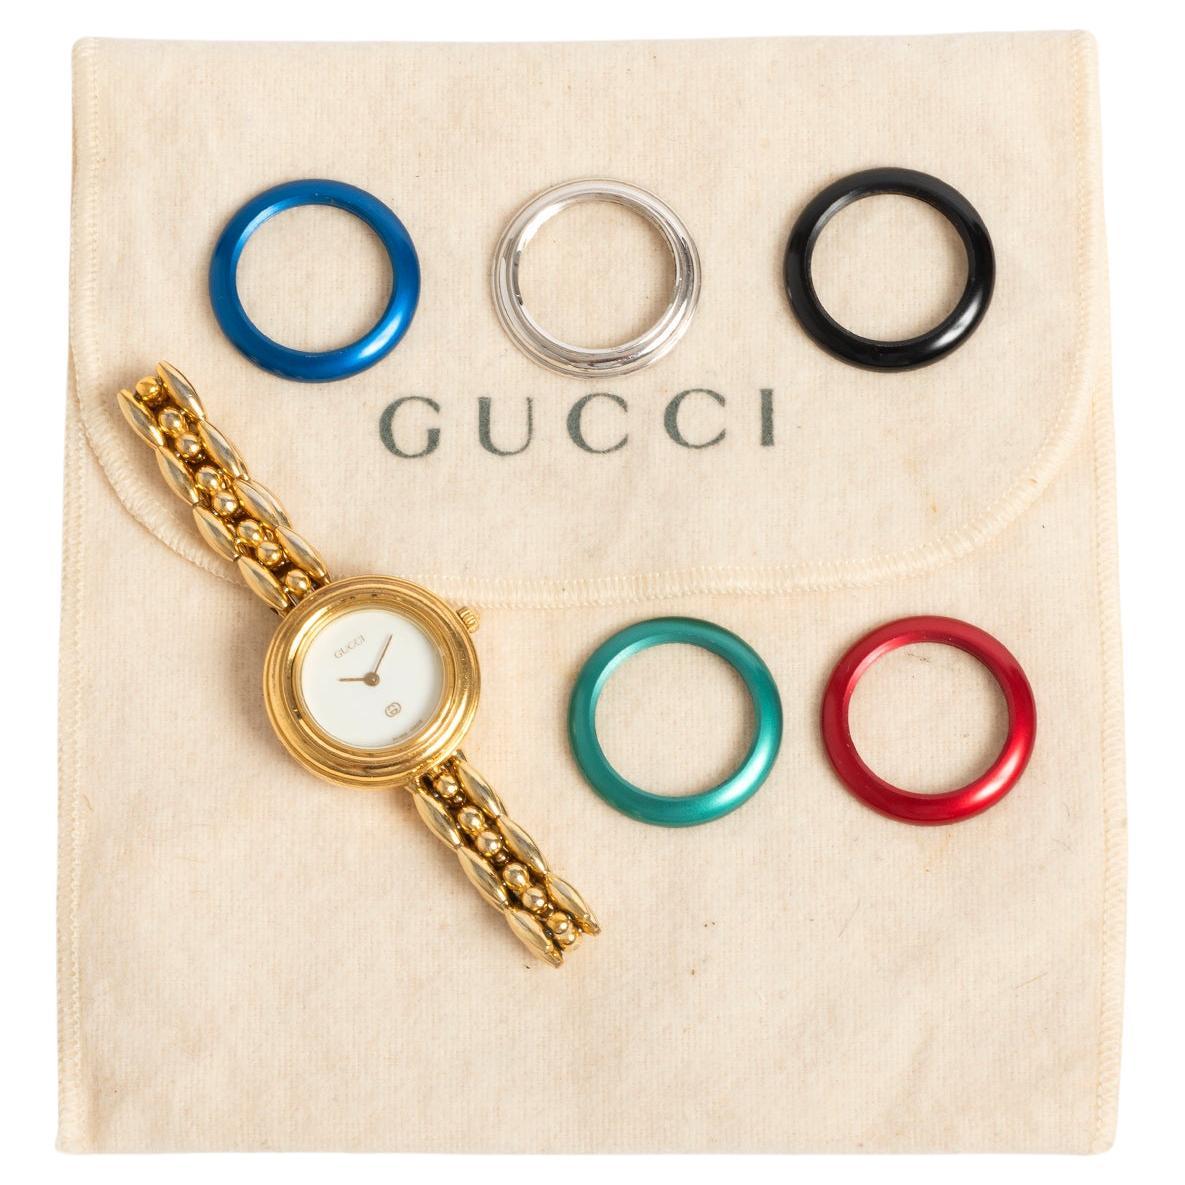 Gucci 11.12 Interchangeable Bezel Ladies Wristwatch. Gold Plated. 170mm Bracelet